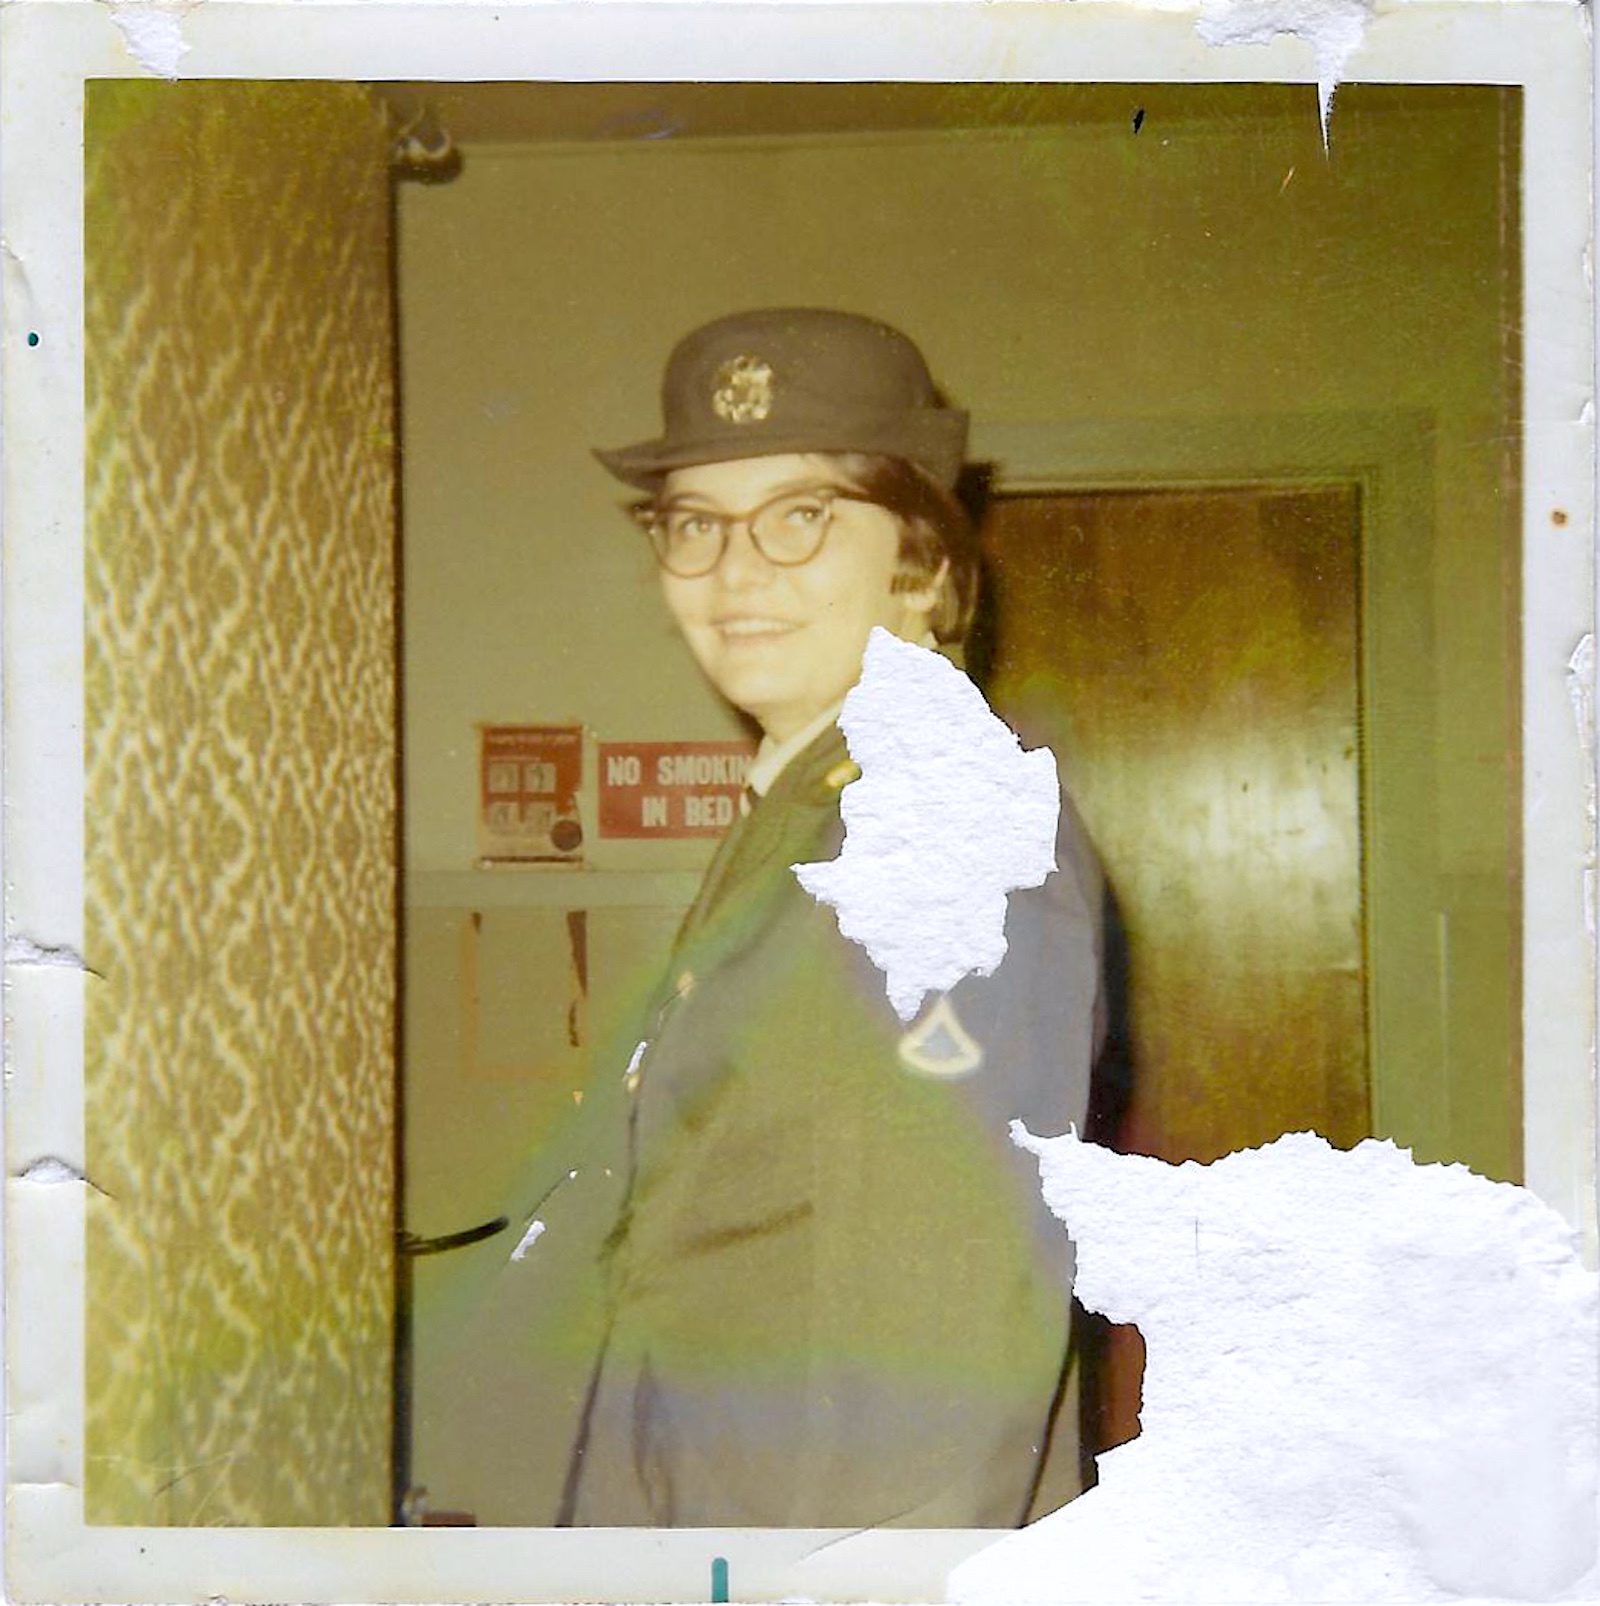 Charlotte goofing around in the barracks, 1969-1970.